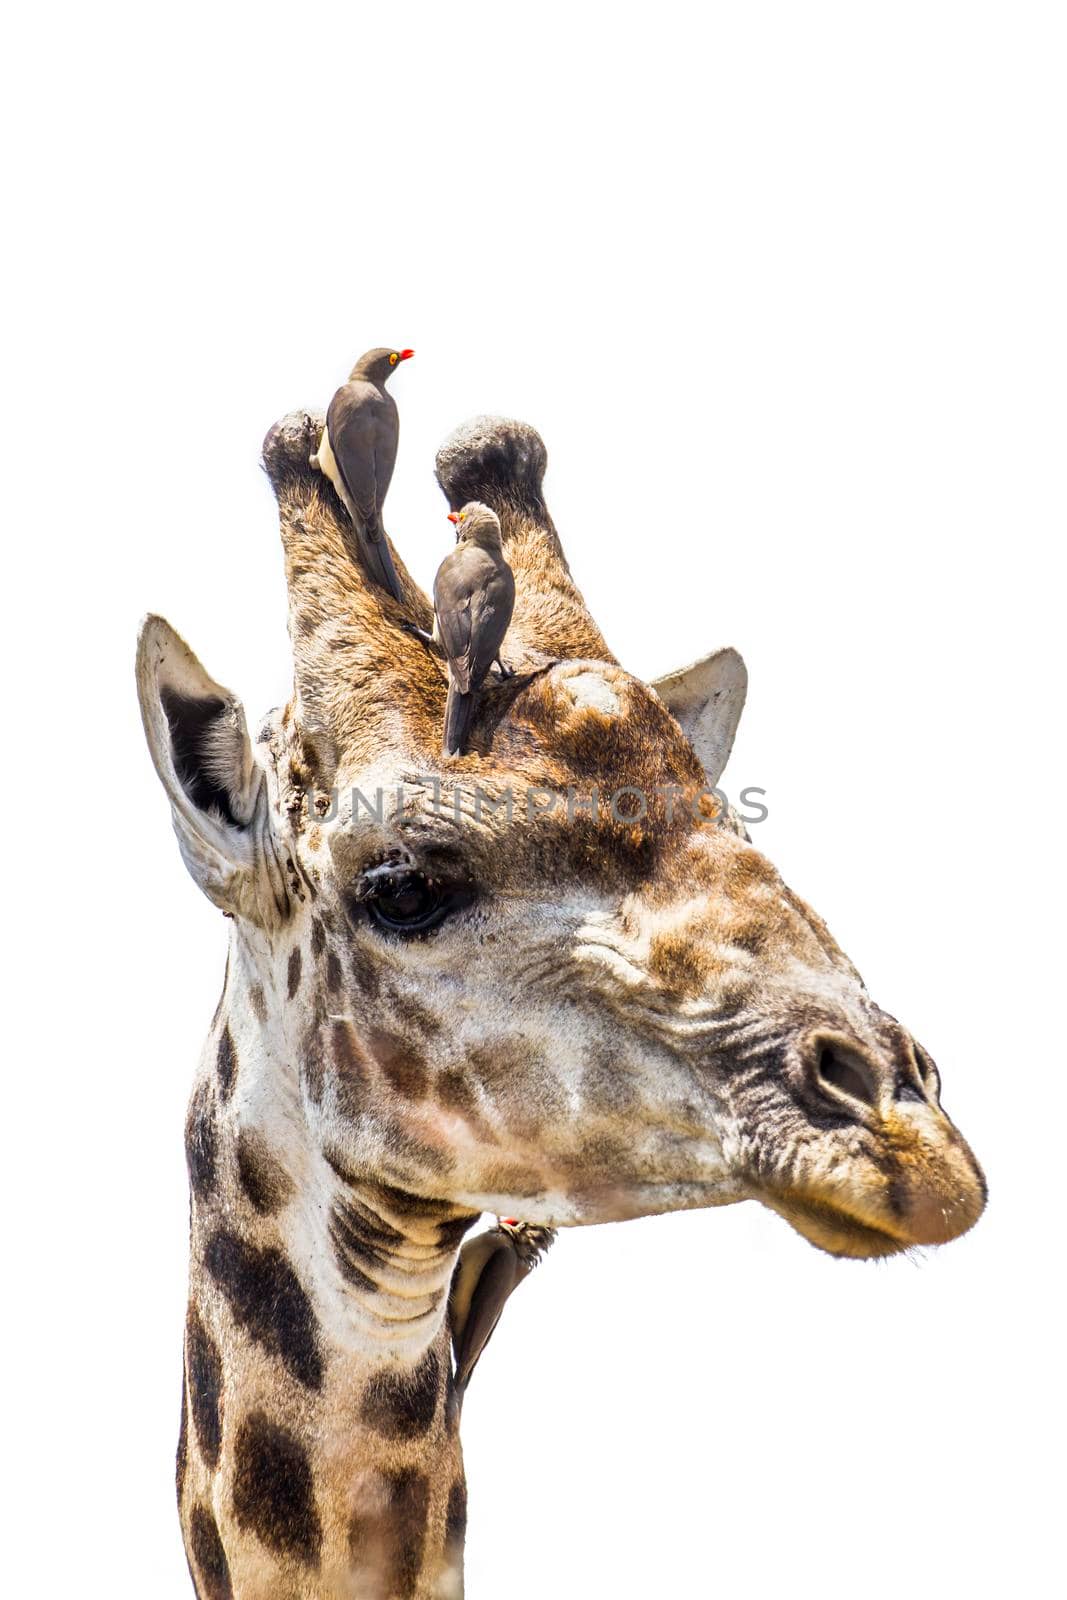 Specie  Giraffa camelopardalis family of Giraffidae